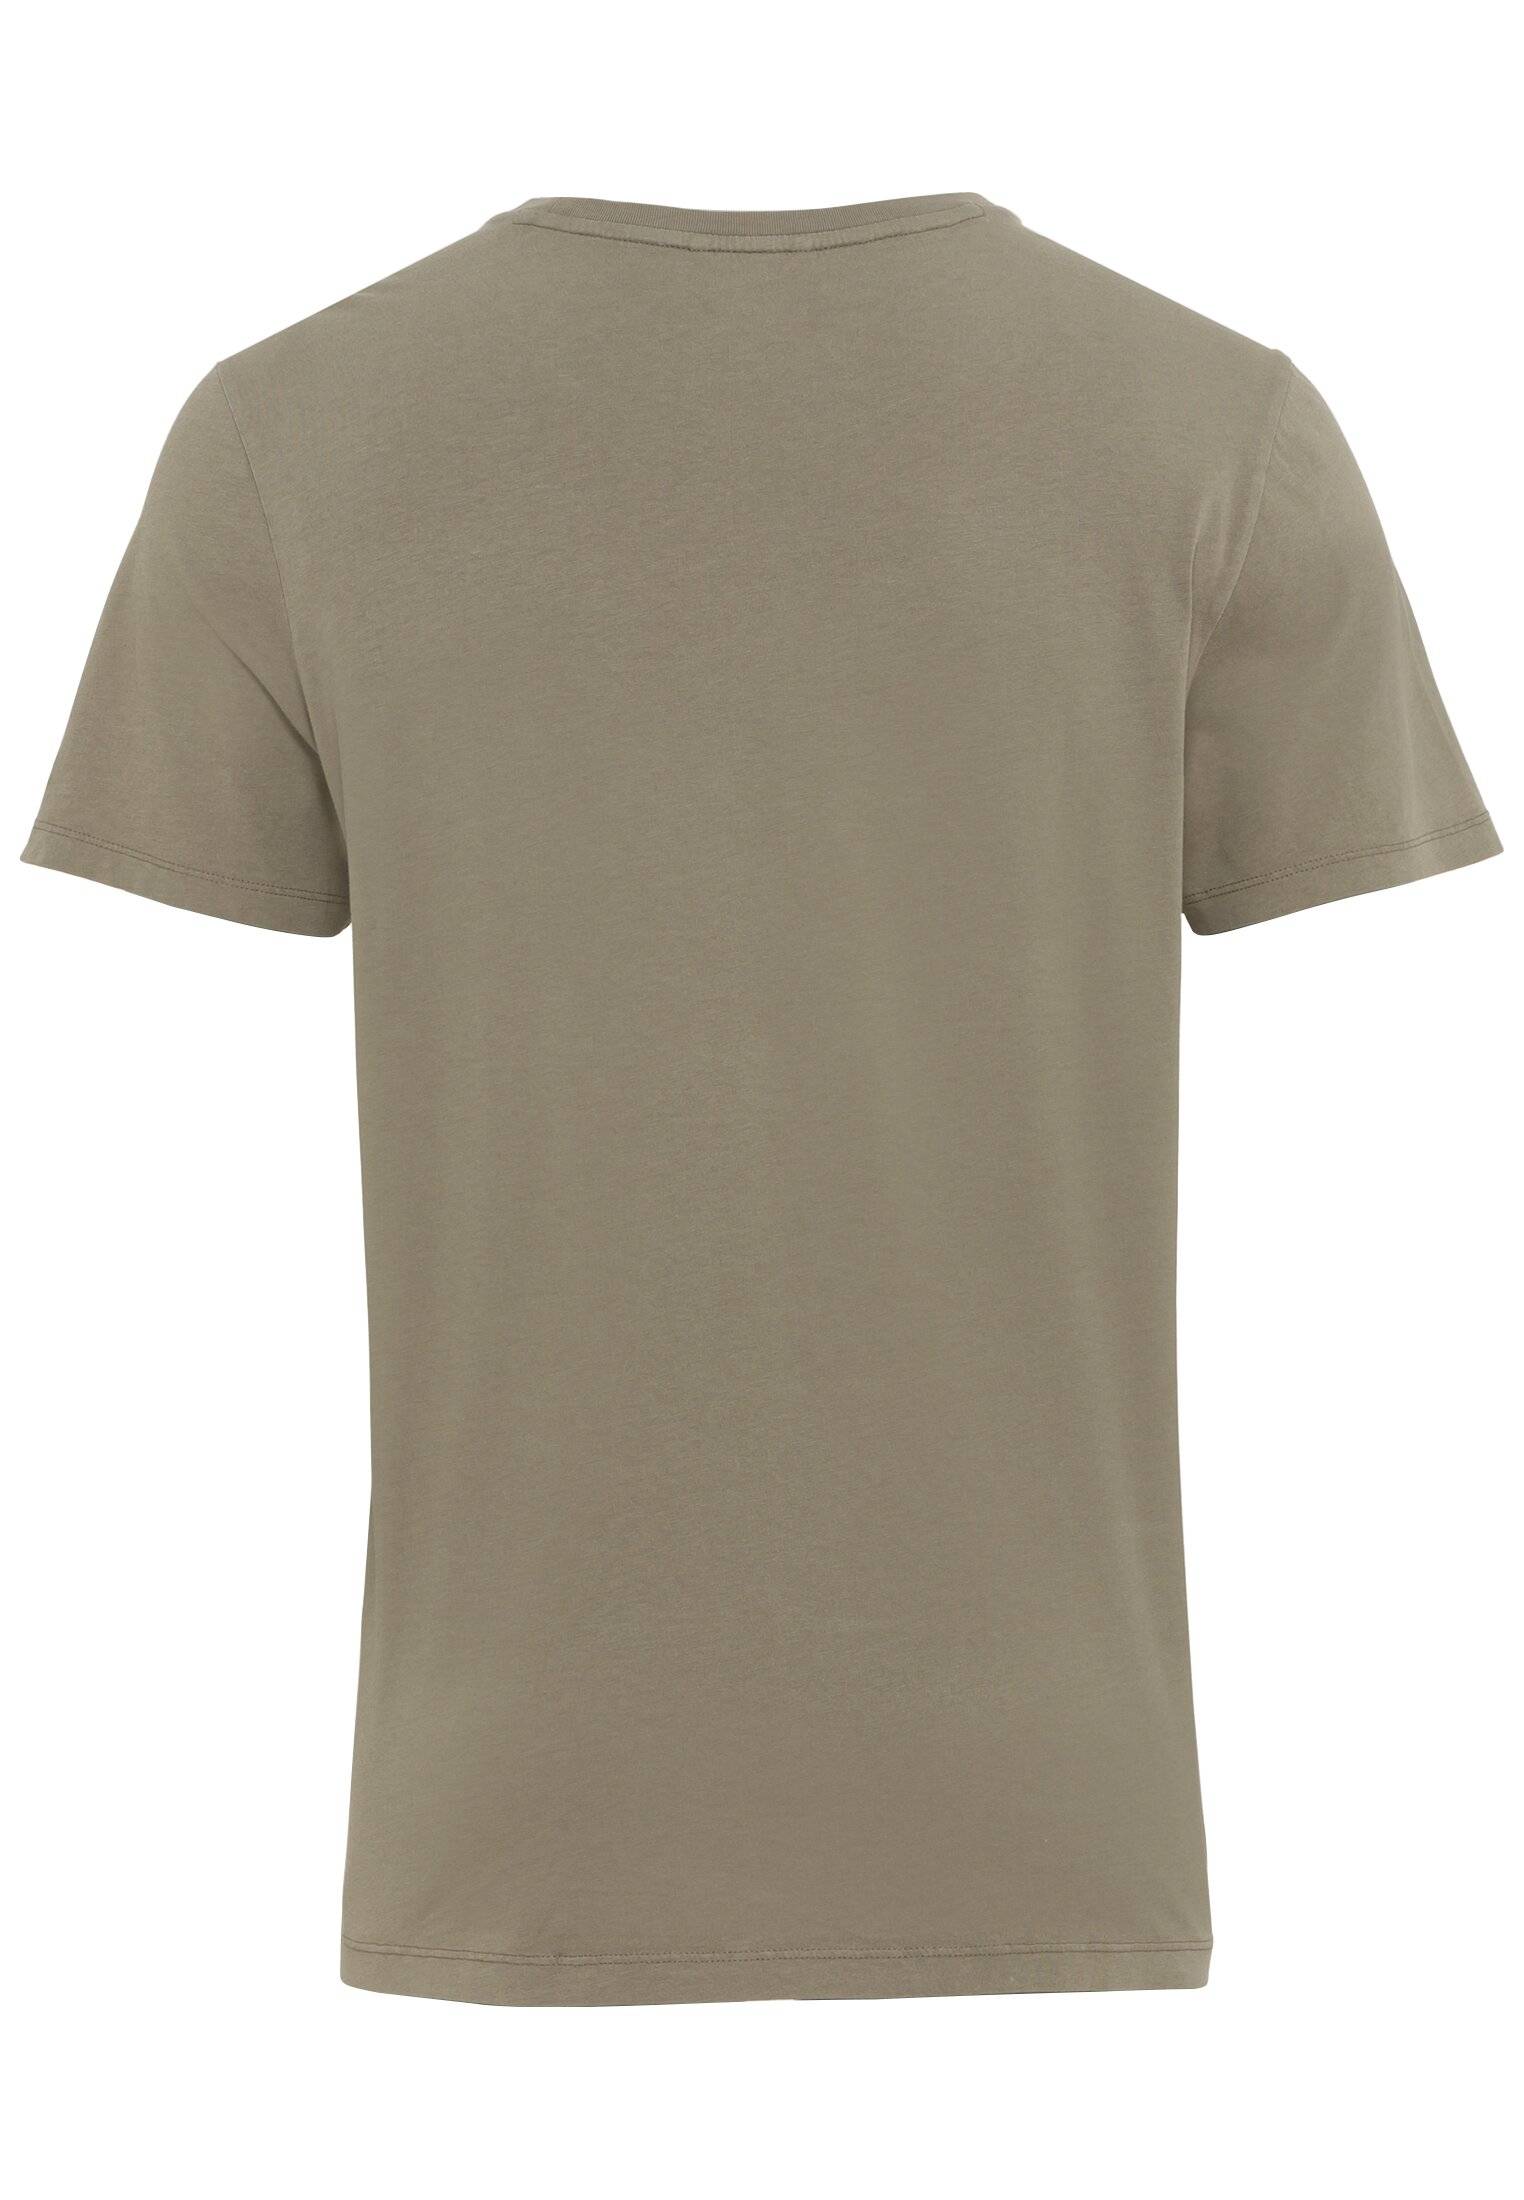 Мужская футболка Camel Active, хаки, размер 48 - фото 2